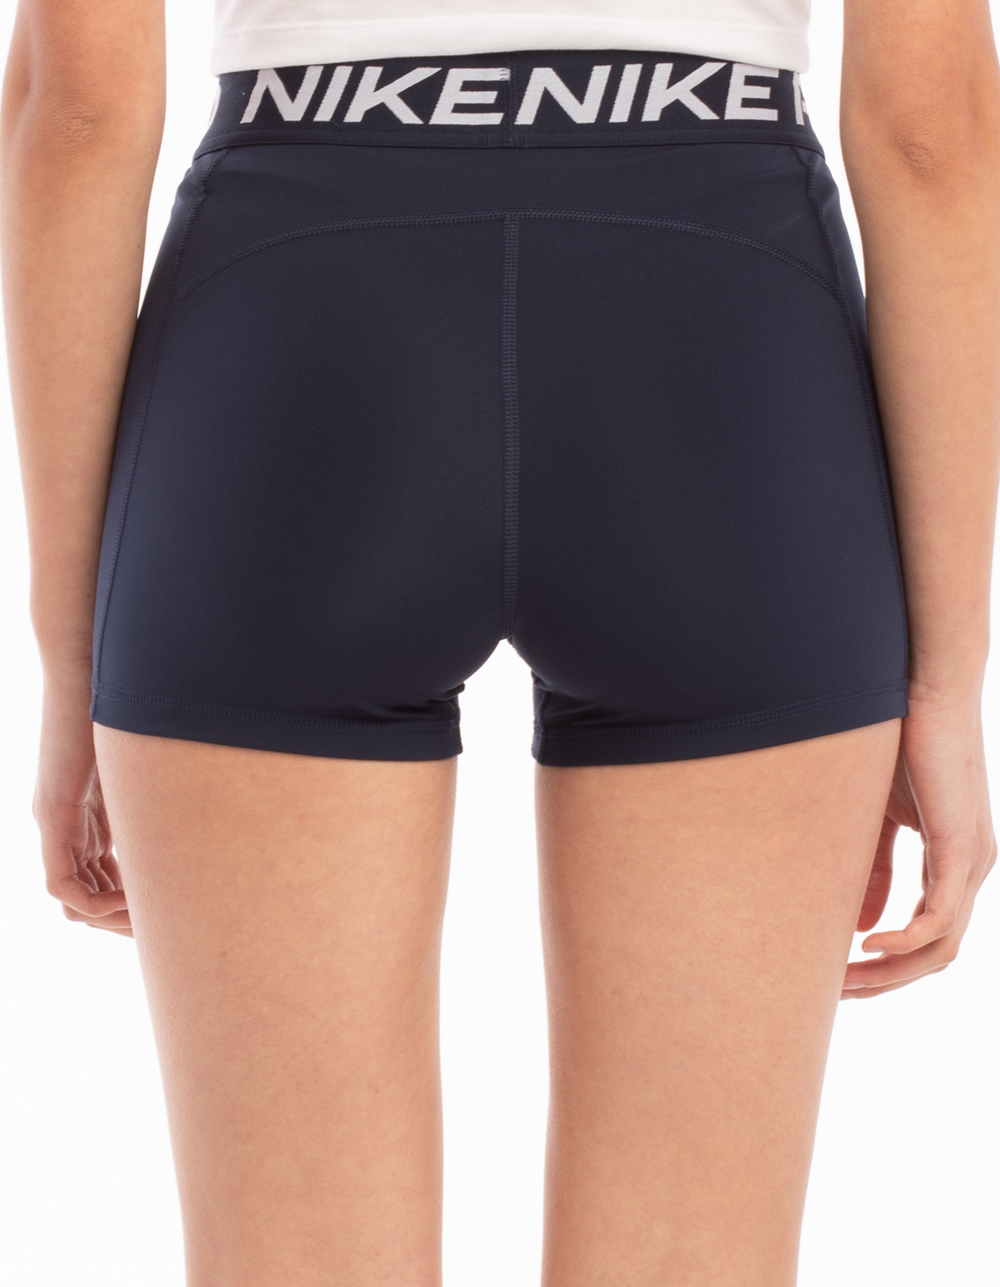 NIKE Pro 365 Womens Compression Shorts - MIDNIGHT BLUE